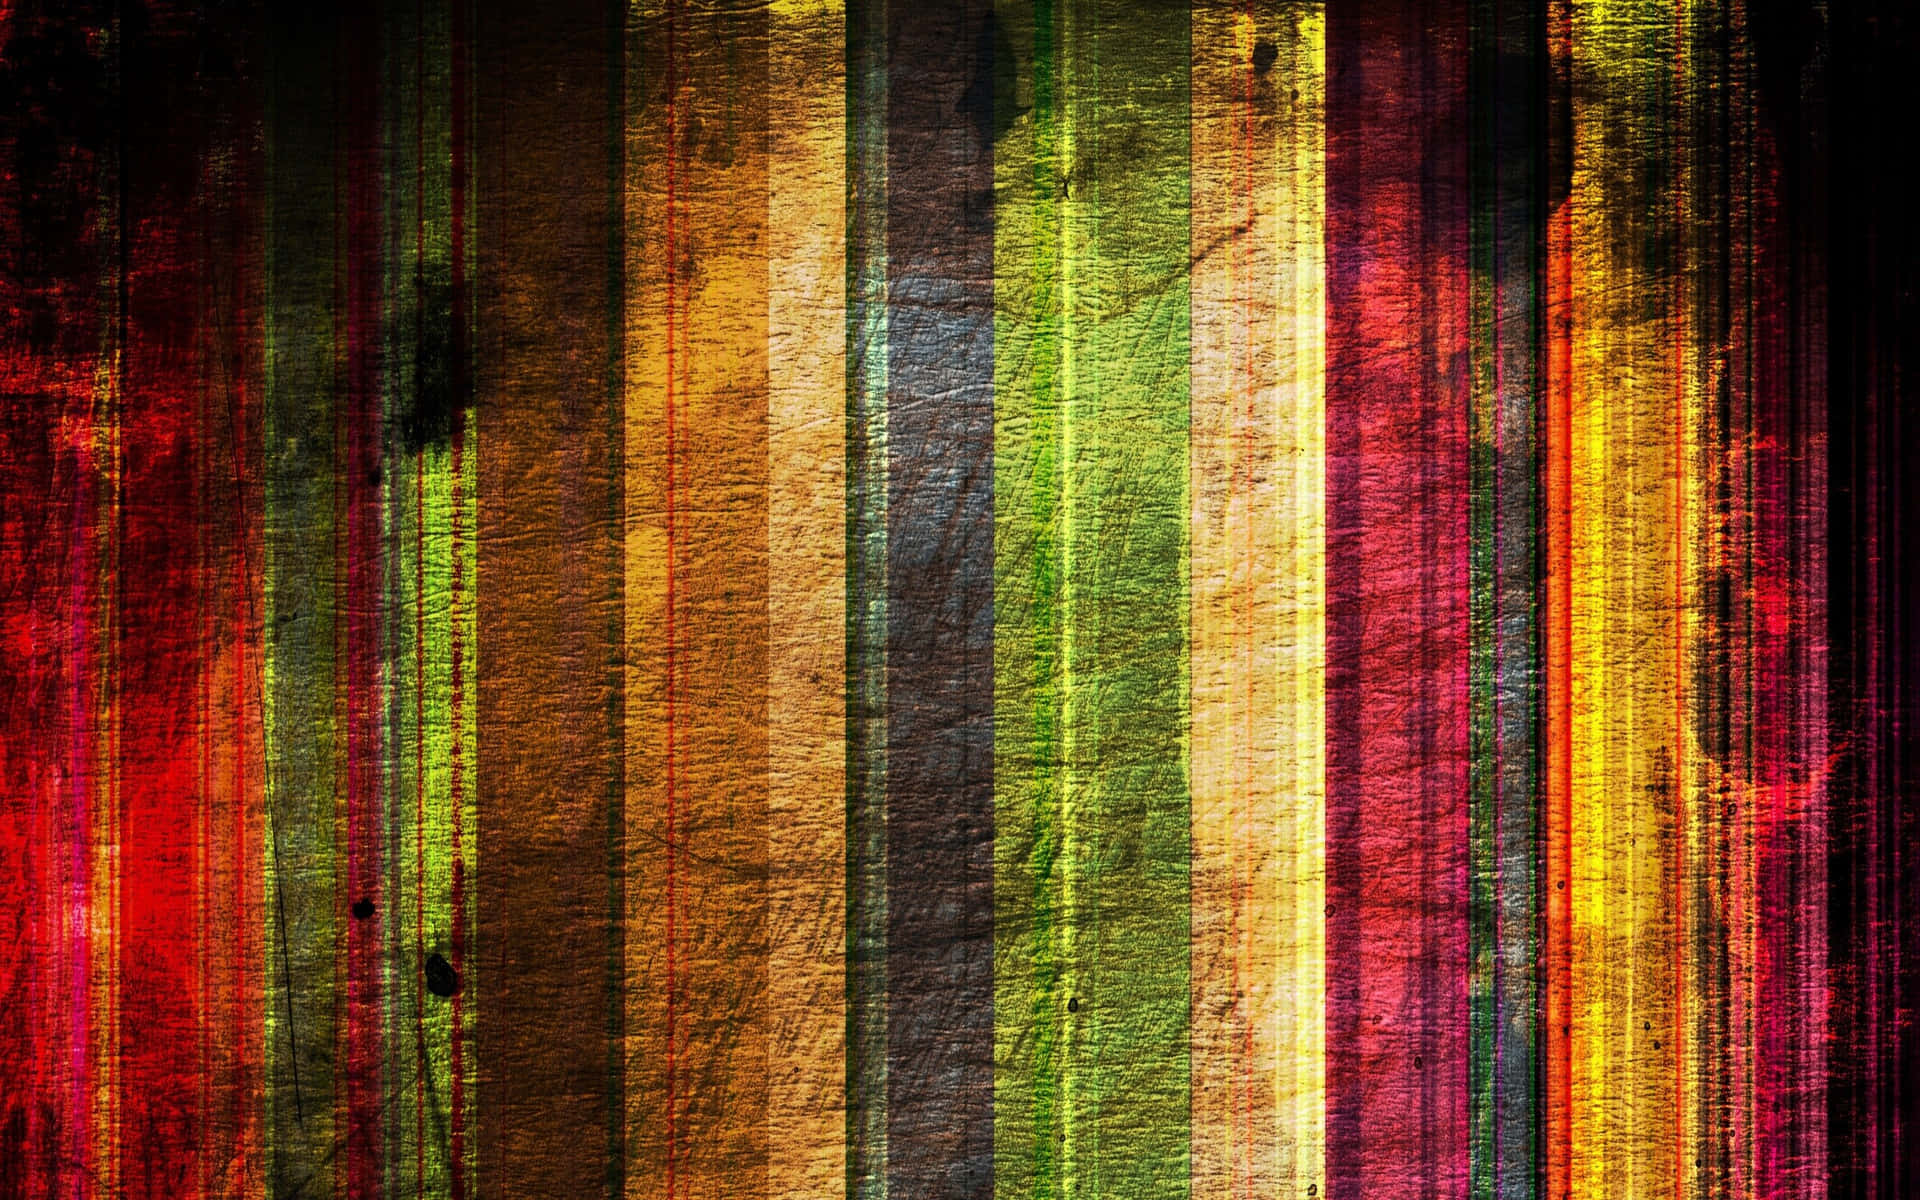 colourful stripes wallpaper